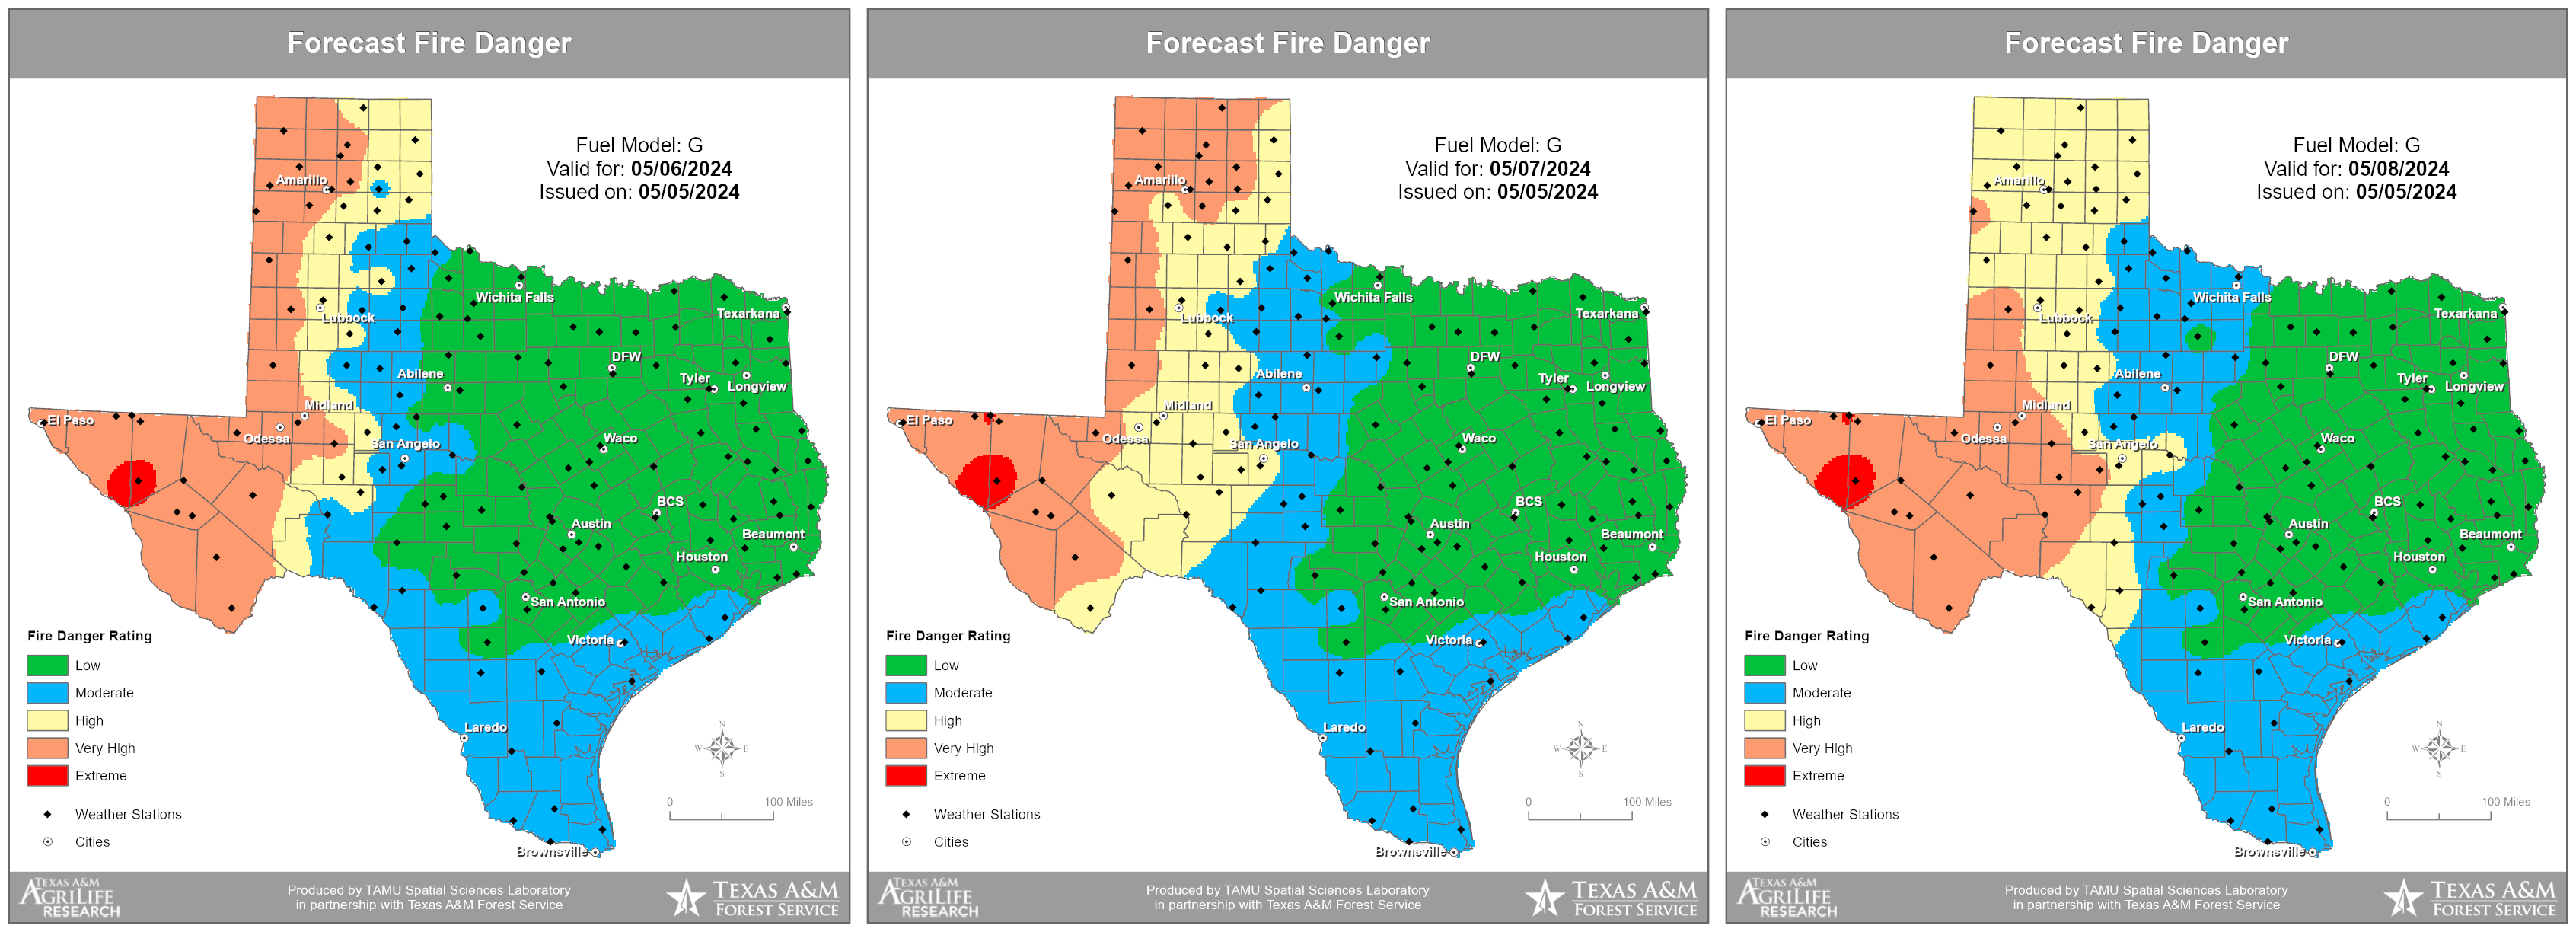 Forecast Fire Danger Map